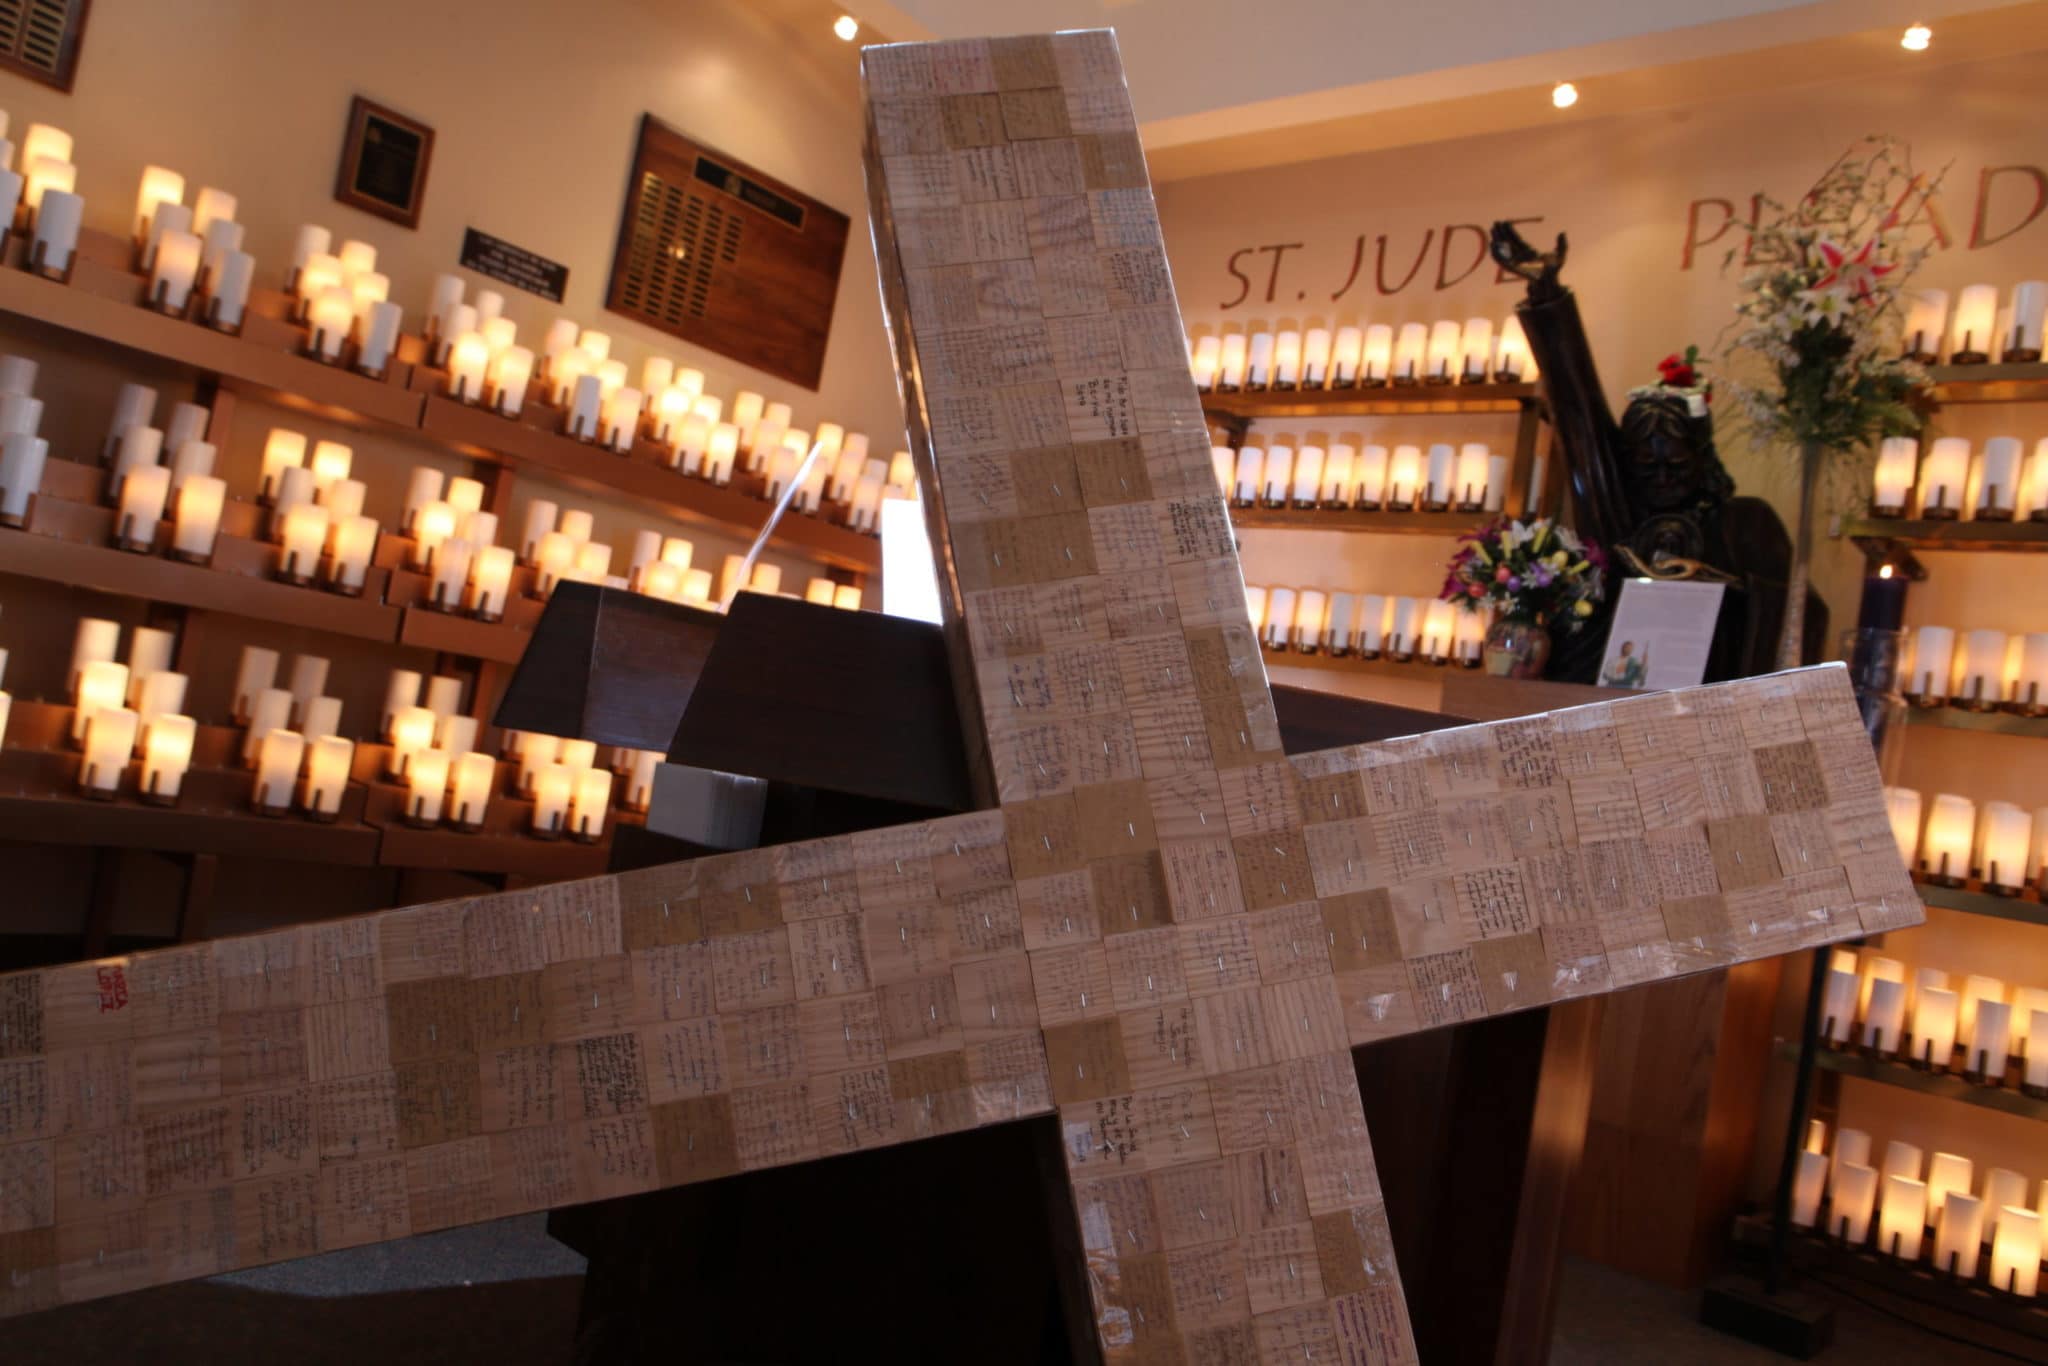 The Holy Week Prayer cross displayed during Easter Holy Week